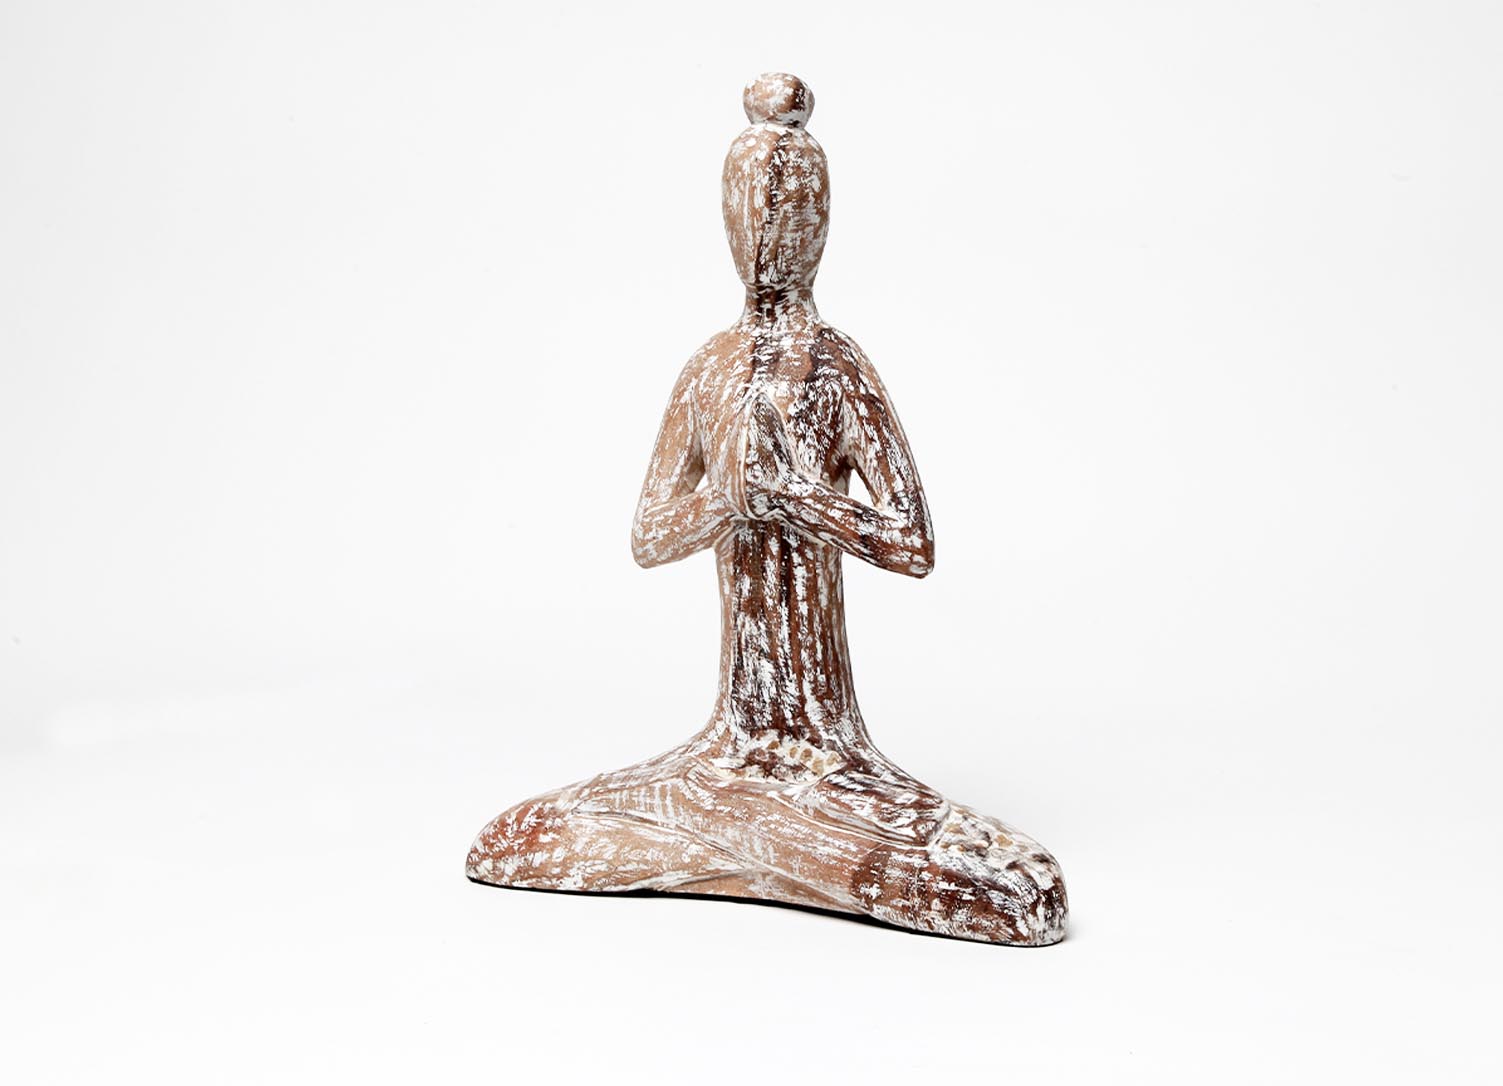 Exner Holz Skulptur Artisanal Yoga Dekofigur Naturholz Massiv Modern Deko Objekt Braun Weiß Natur